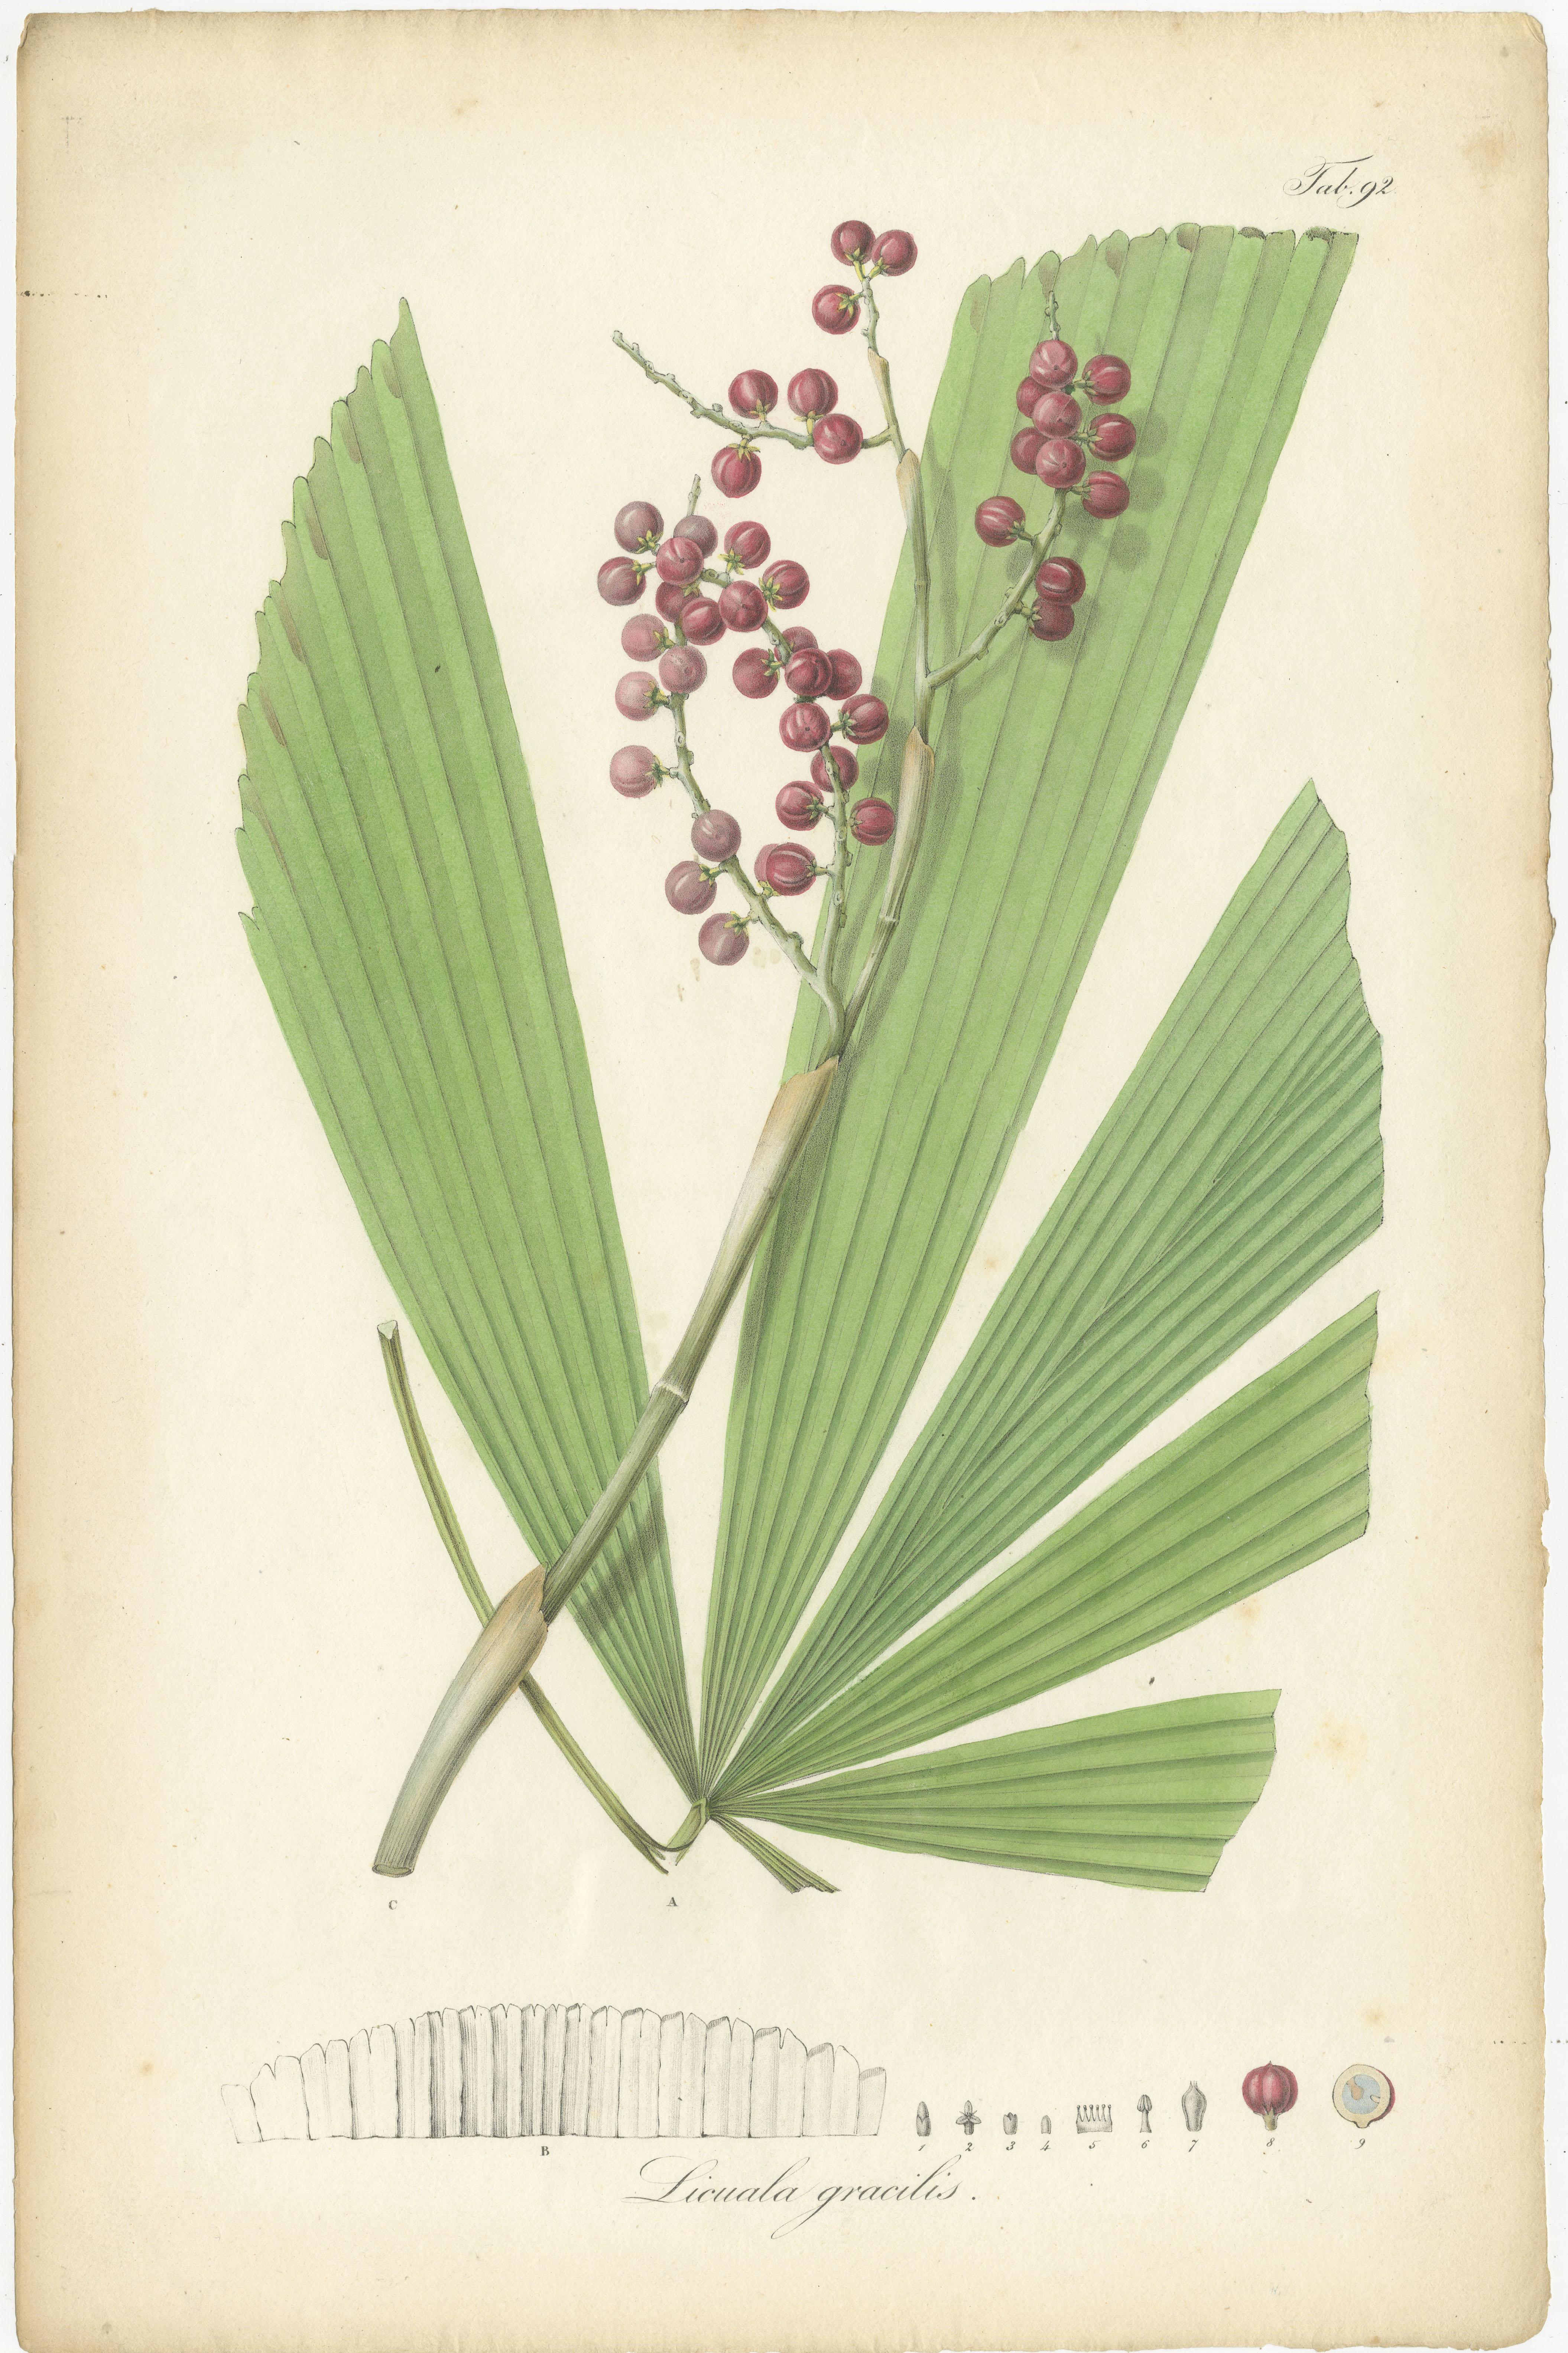 Antique botany print titled 'Licuala gracilis'. Original old print of a species of fan palm. This print originates from volume 2 of 'Rumphia, sive, Commentationes botanicæ imprimis de plantis Indiæ Orientalis (..)'. Published by C.L. Blume, 1836.